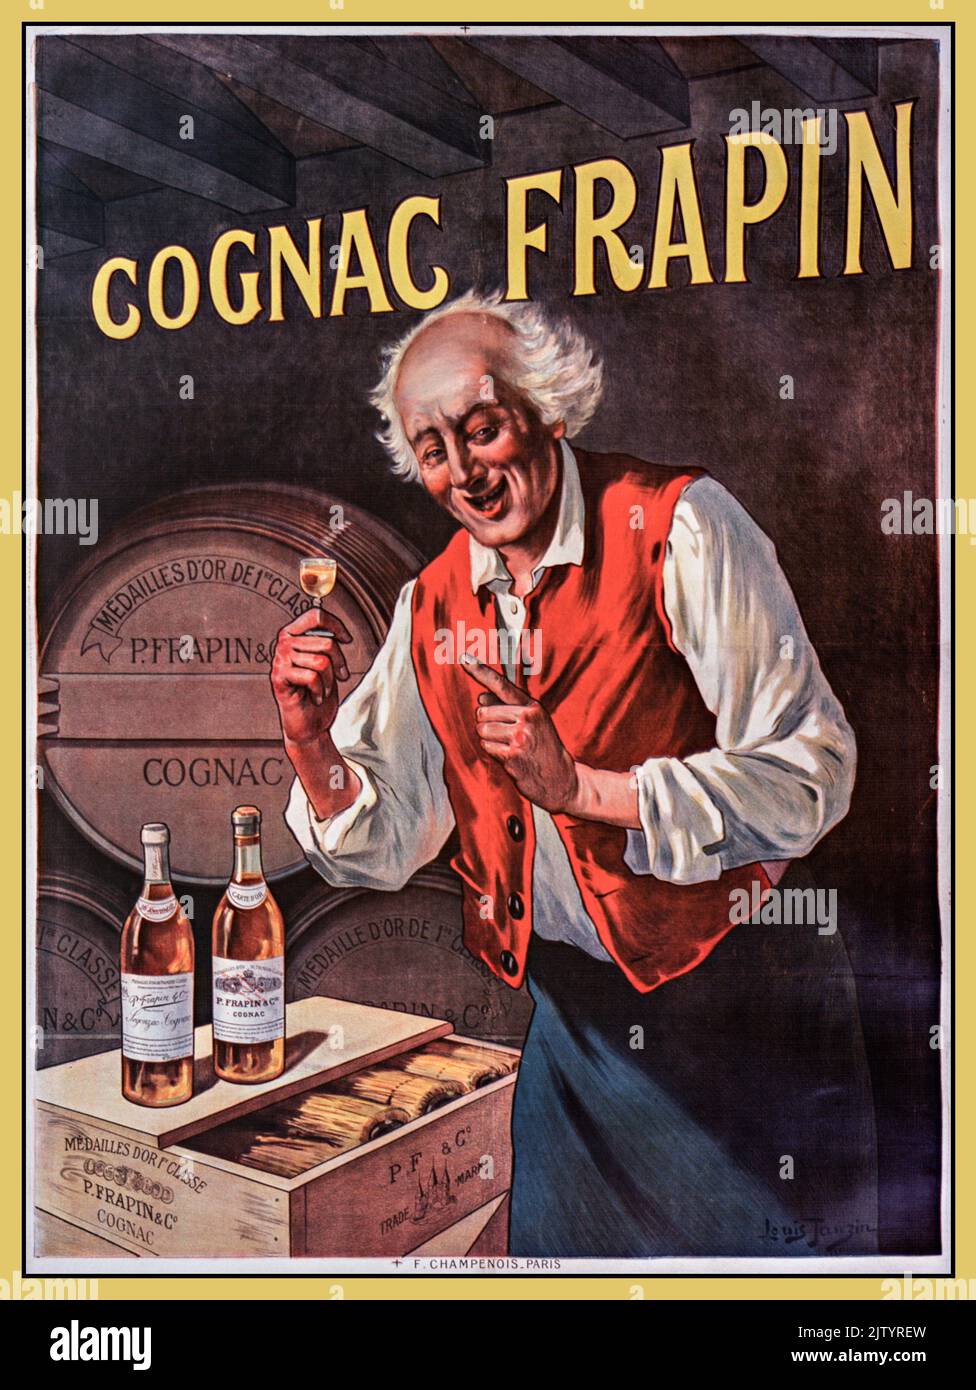 COGNAC FRAPIN Vintage French alcohol Drinks Poster pubblicitario per Cognac. Cognac Frapin - di Tauzin Louis (1900). Foto Stock